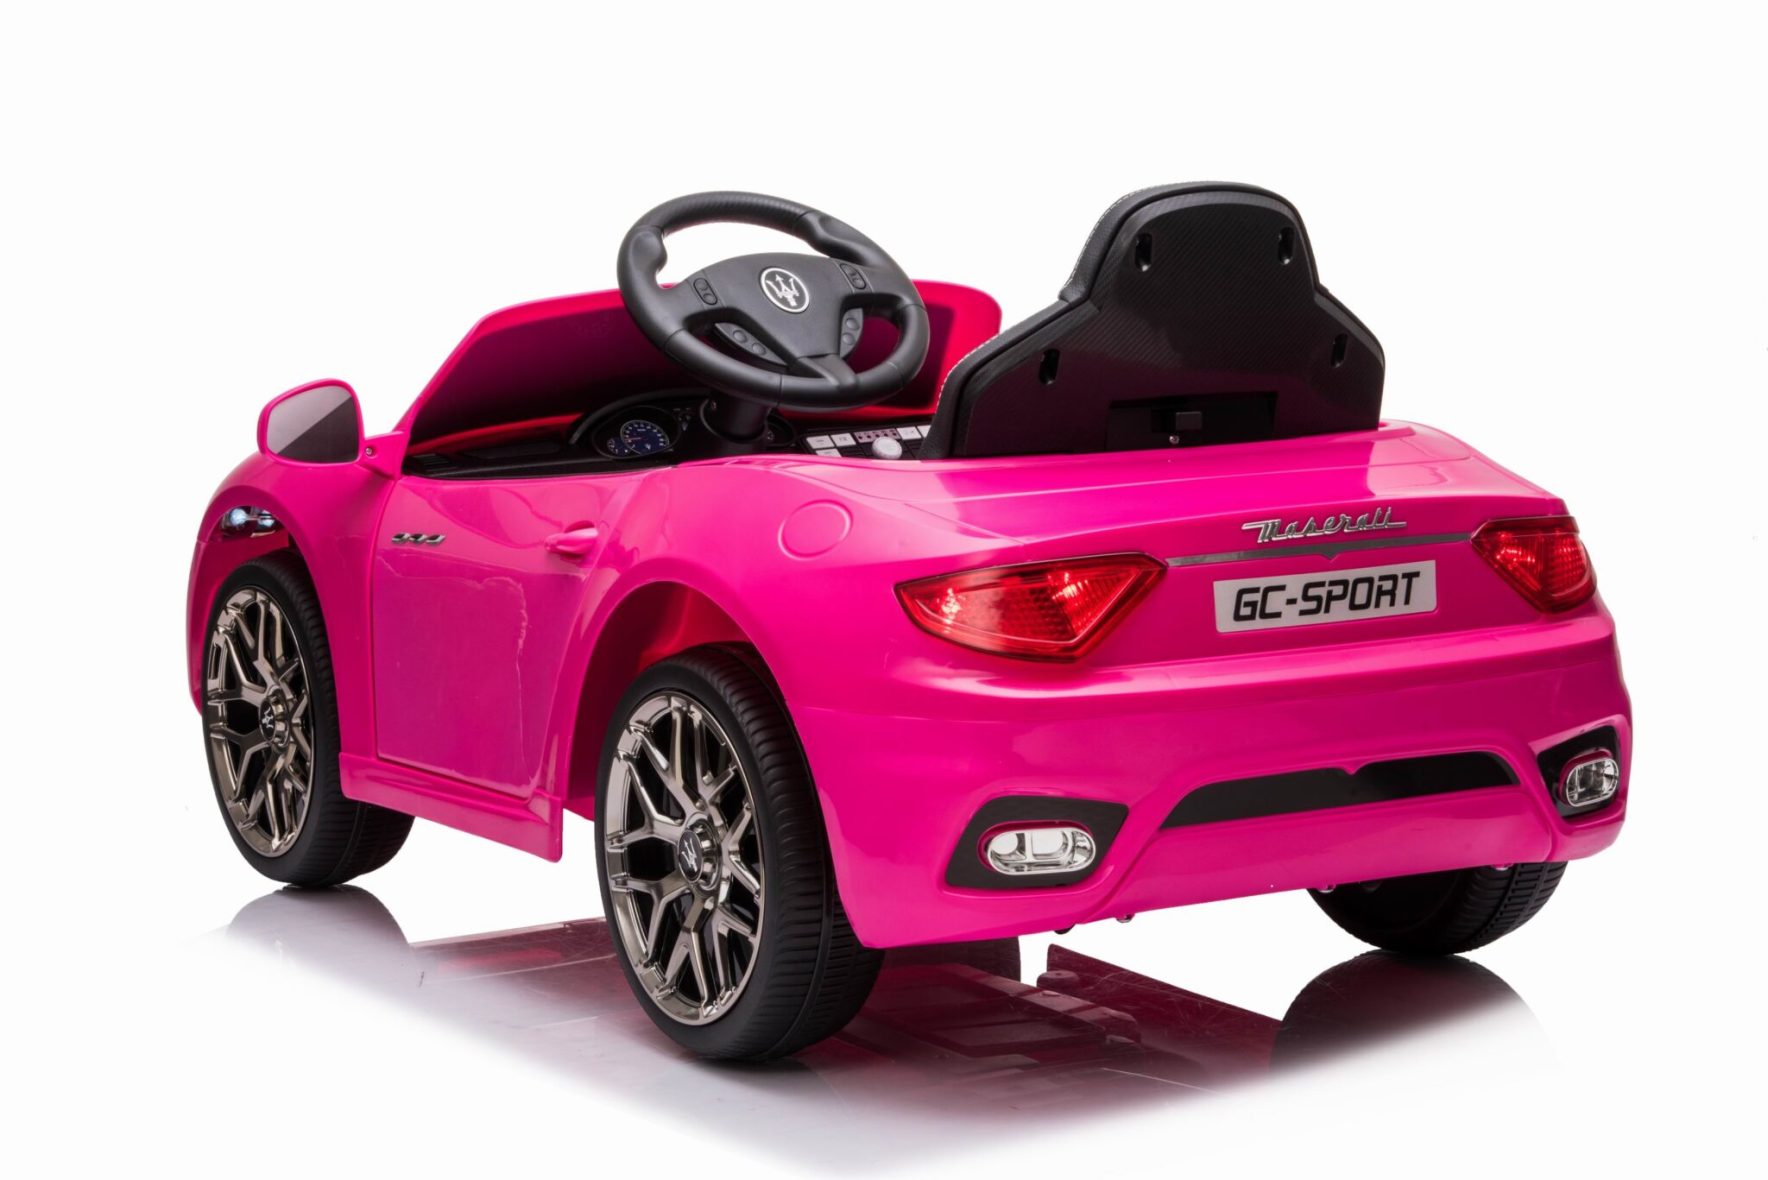 Elektrische-kinderauto-Maserati-GC-Sport